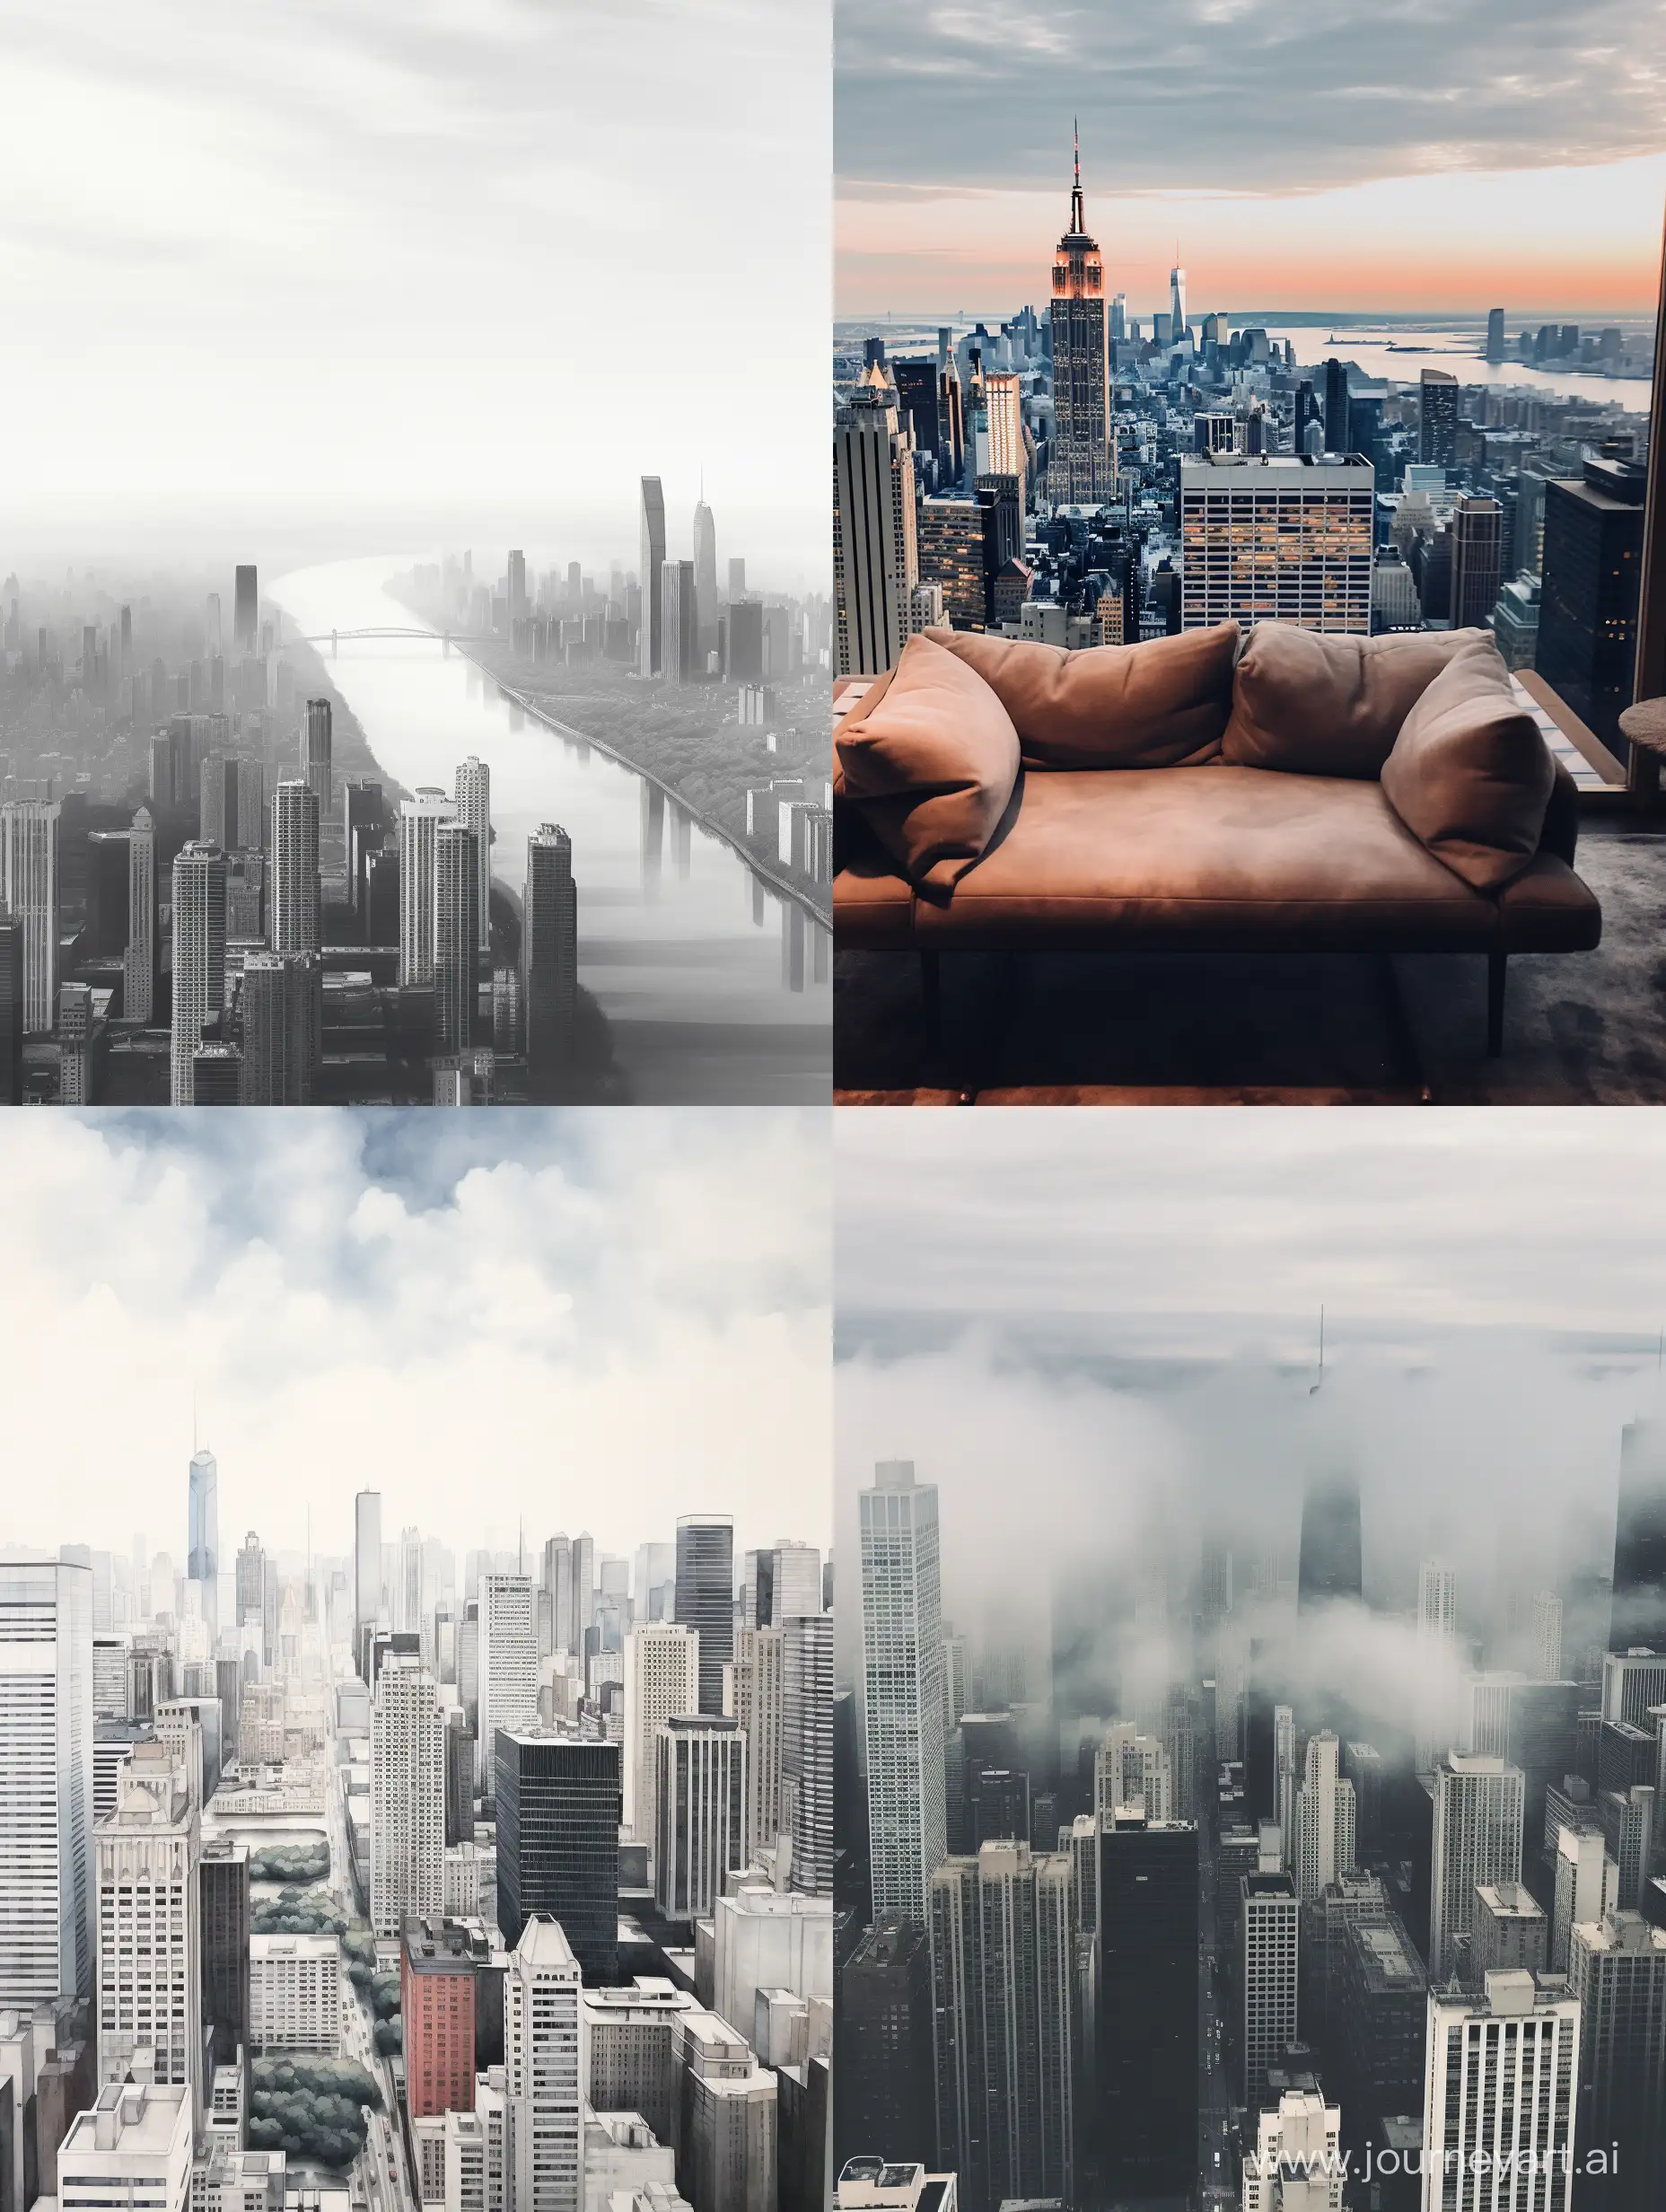 Realistic-1970s-New-York-City-Skyline-Mobile-Wallpaper